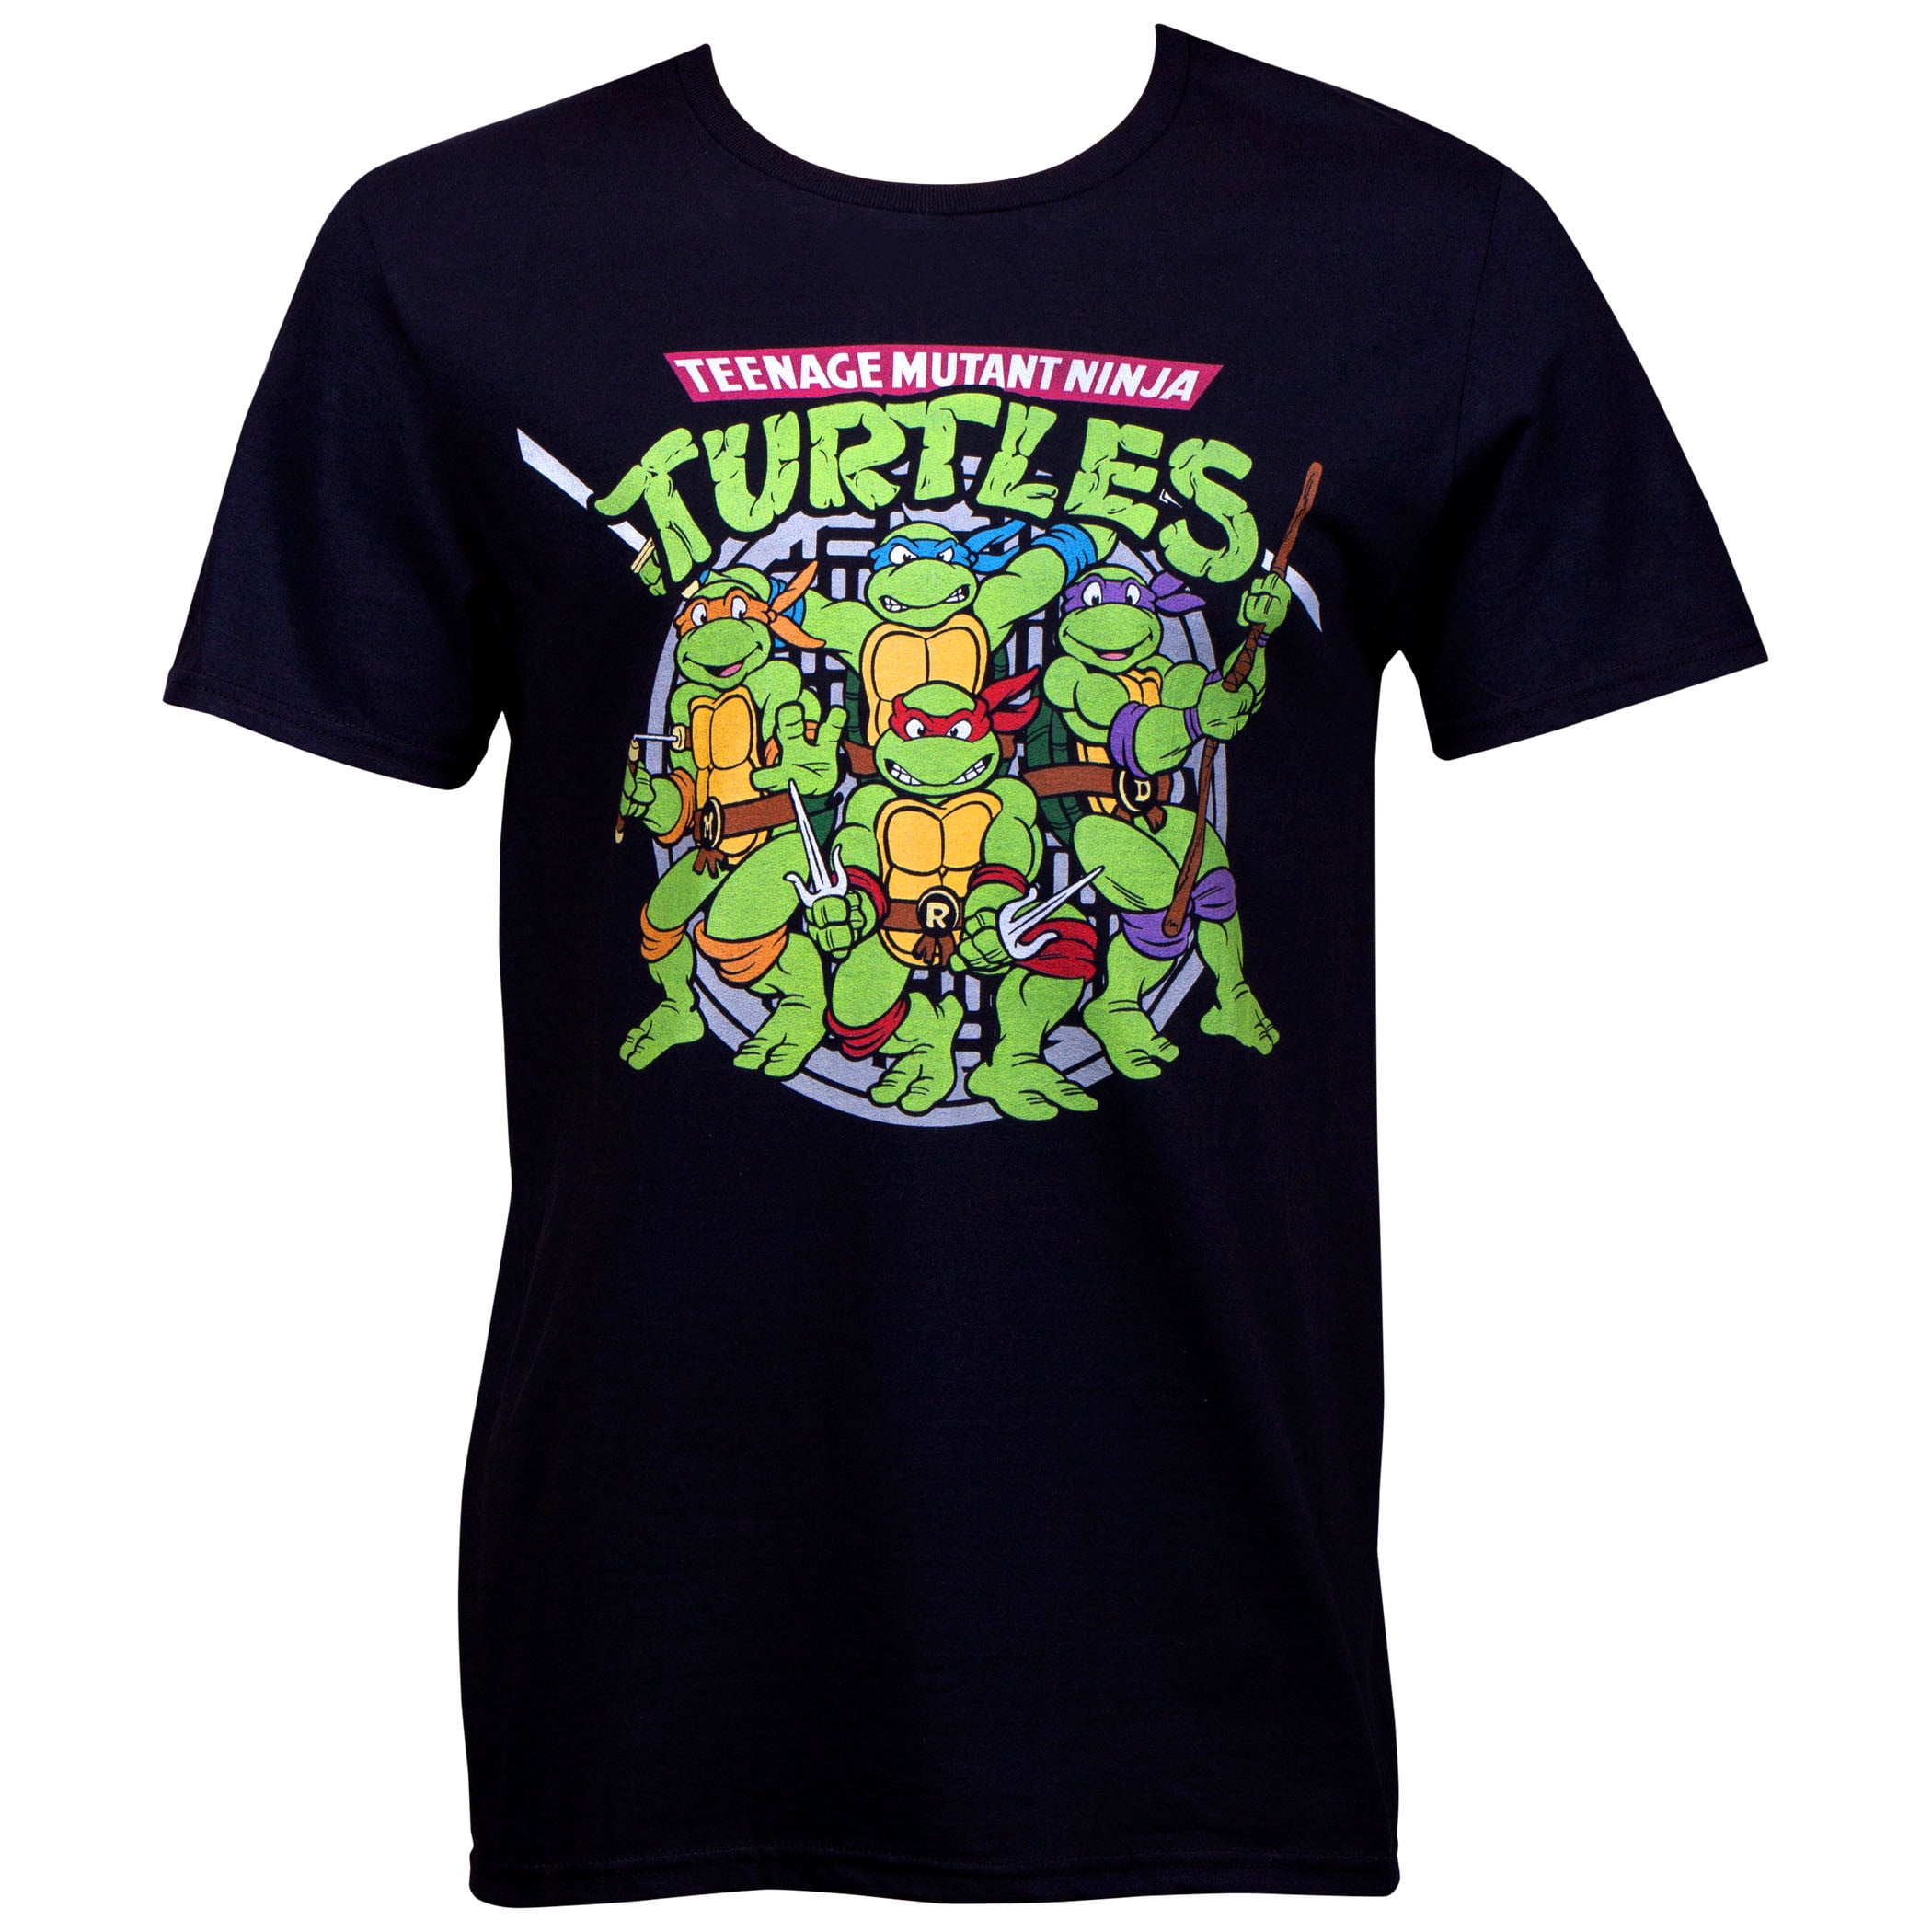 Teenage Mutant Ninja Turtles TMNT Men's Black T-Shirt Tee Shirt-Small